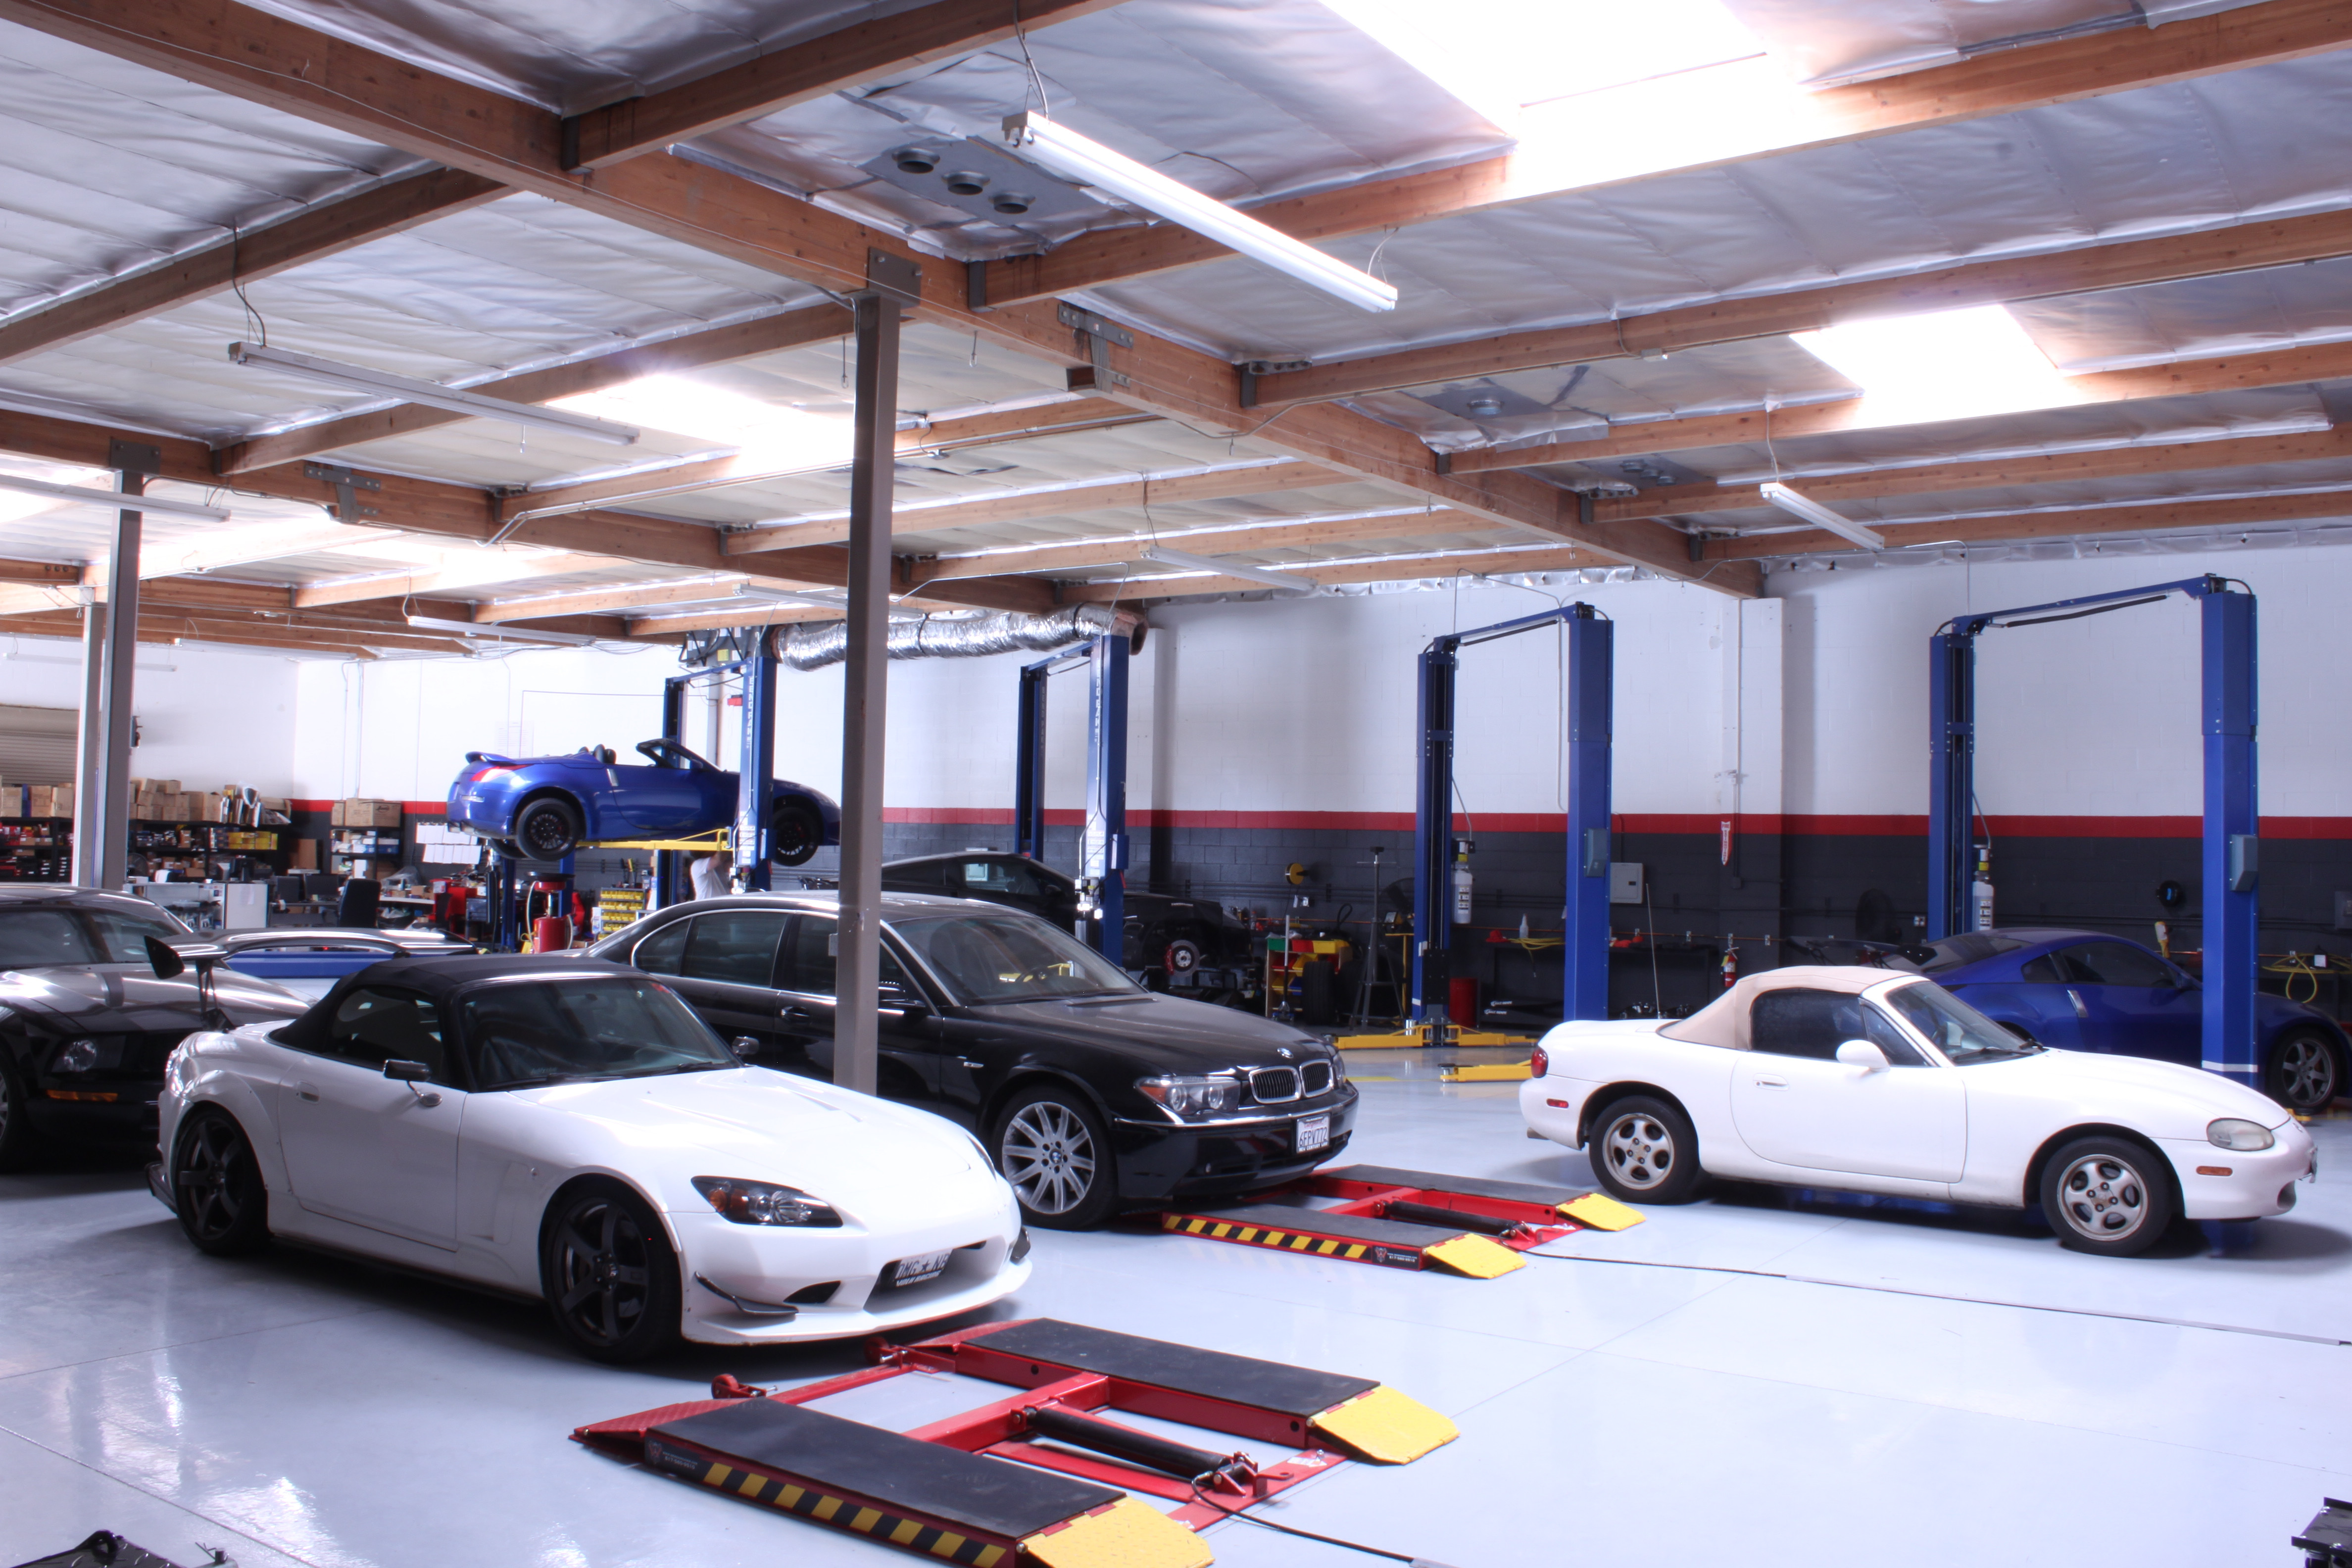 Best ideas about DIY Auto Garage
. Save or Pin Diy Auto Garage Atlanta DIY Projects Now.